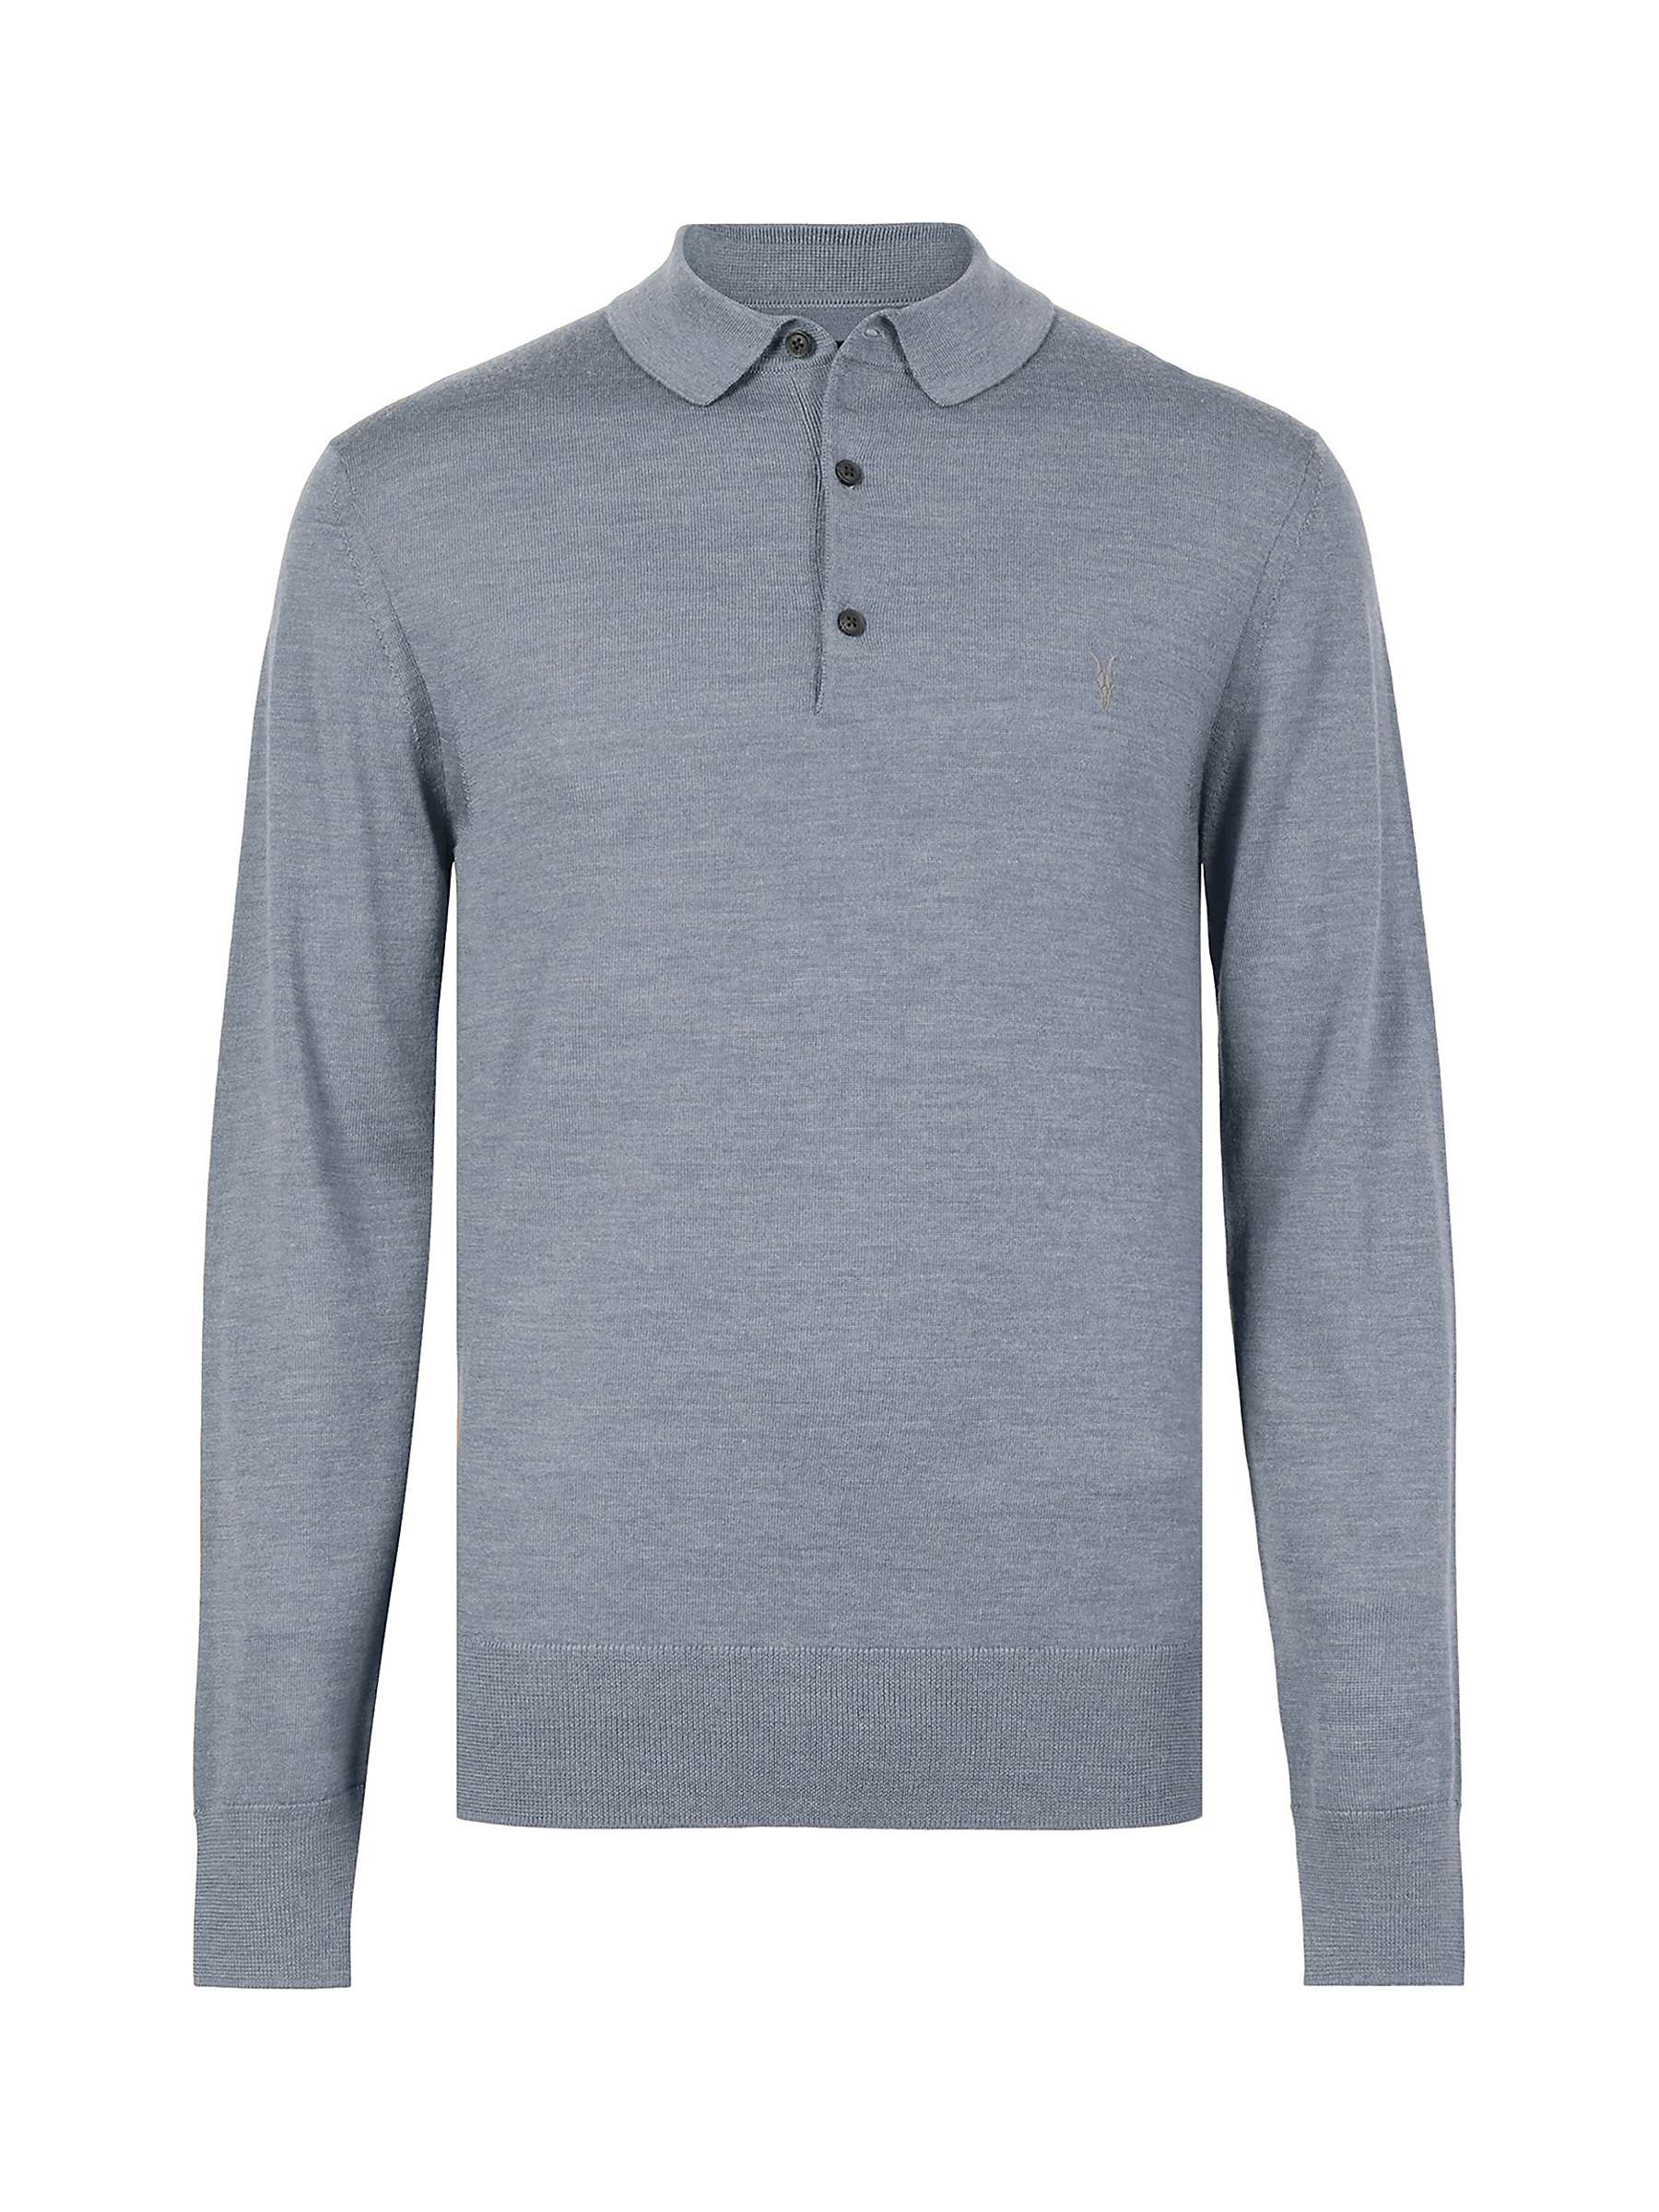 Buy AllSaints Mode Merino Regular Fit Long Sleeve Polo Shirt, Dusty Blue Online at johnlewis.com